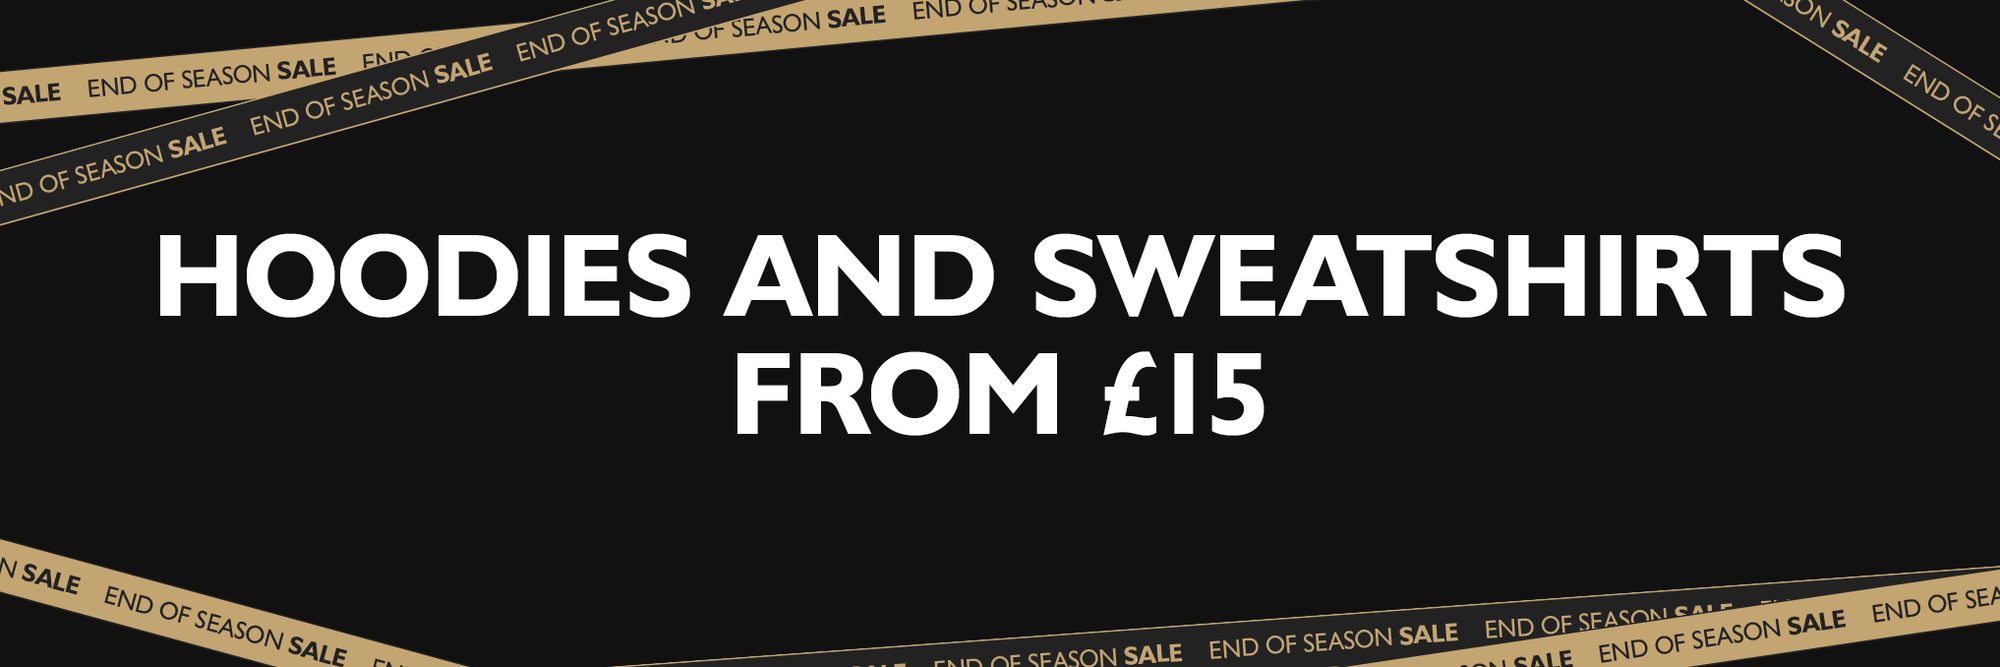 23/24 End of Season Sale - Hoodies and Sweatshirts from £15